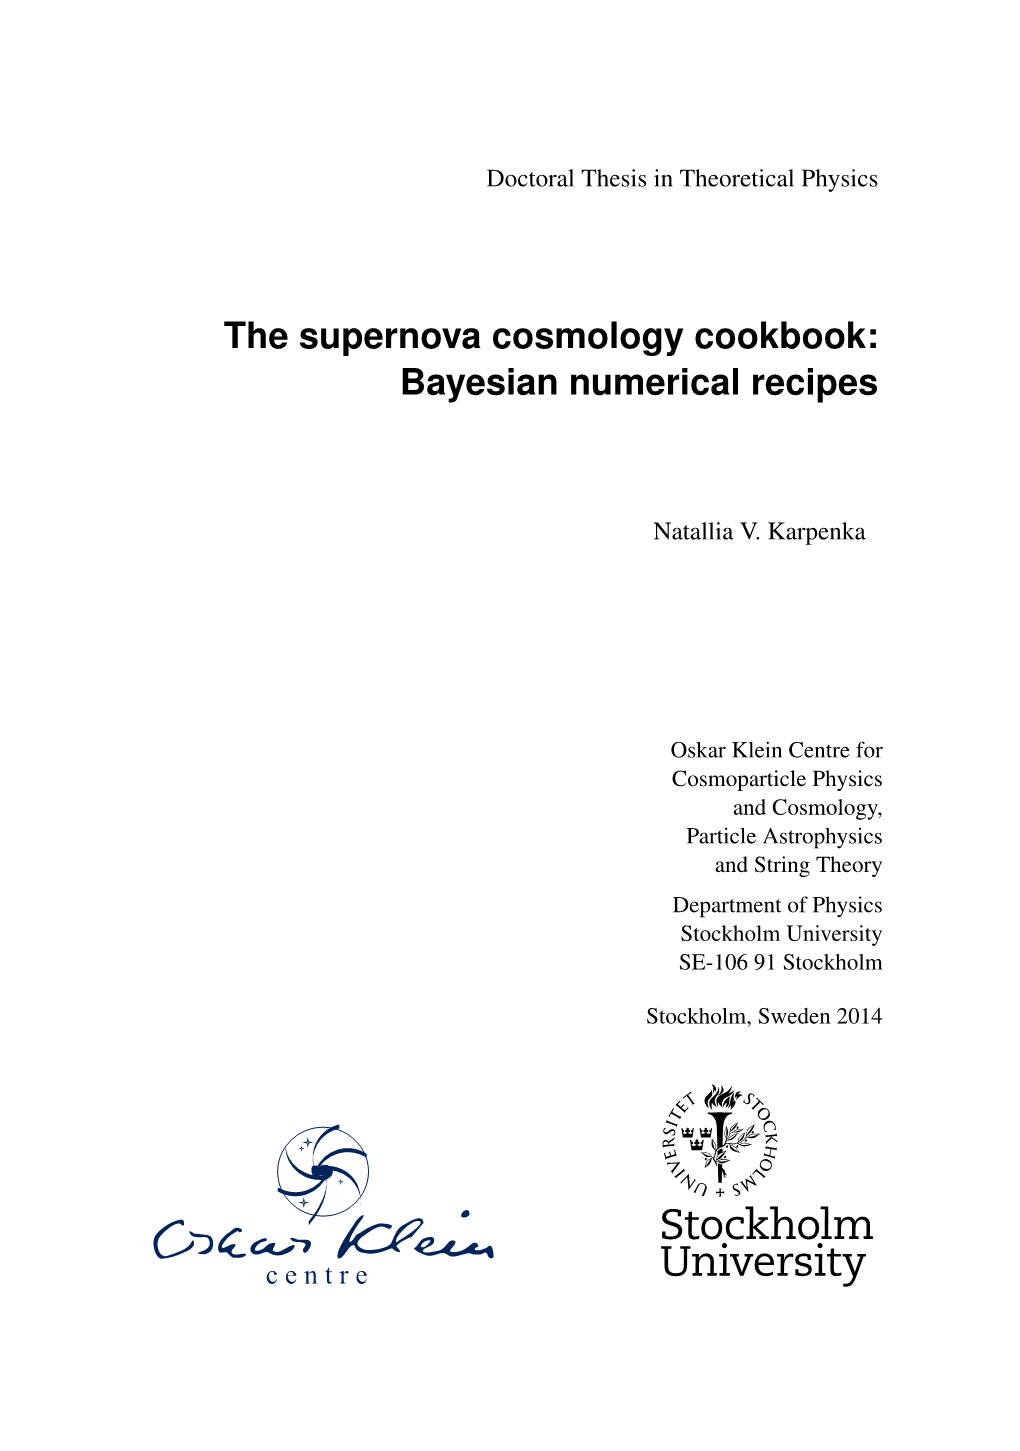 The Supernova Cosmology Cookbook: Bayesian Numerical Recipes